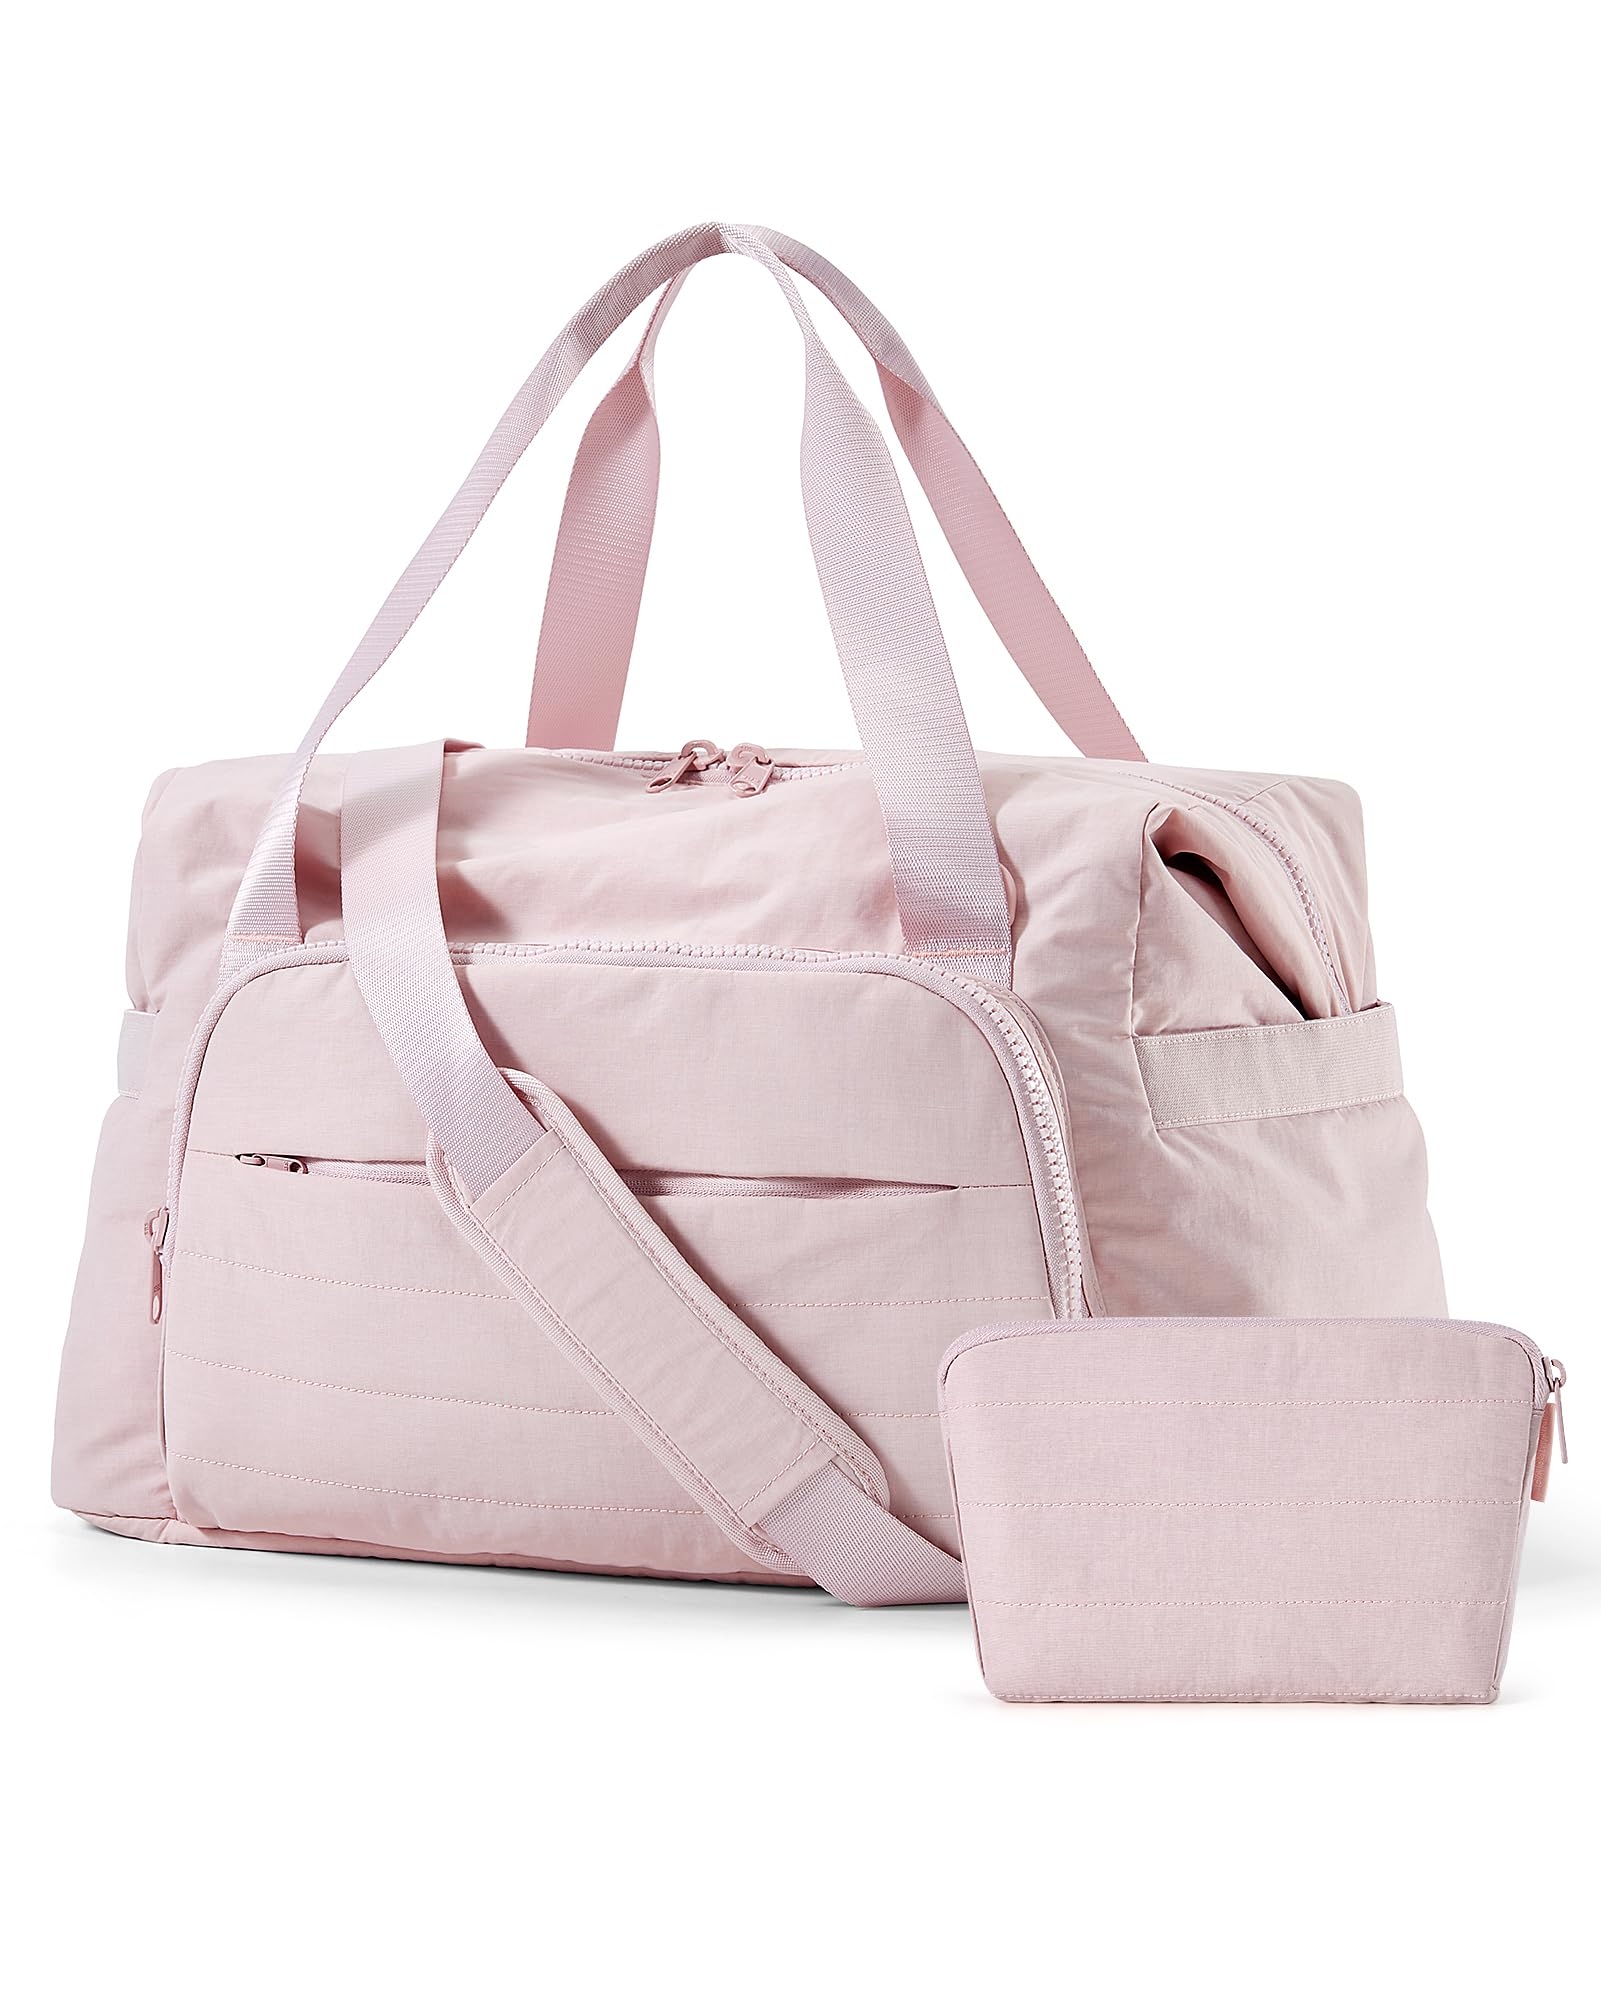 Travel Duffle Bag Weekender Bags for Women Large Carry on Overnight Bag Gym Bag Travel Bag Workout Dance Bag